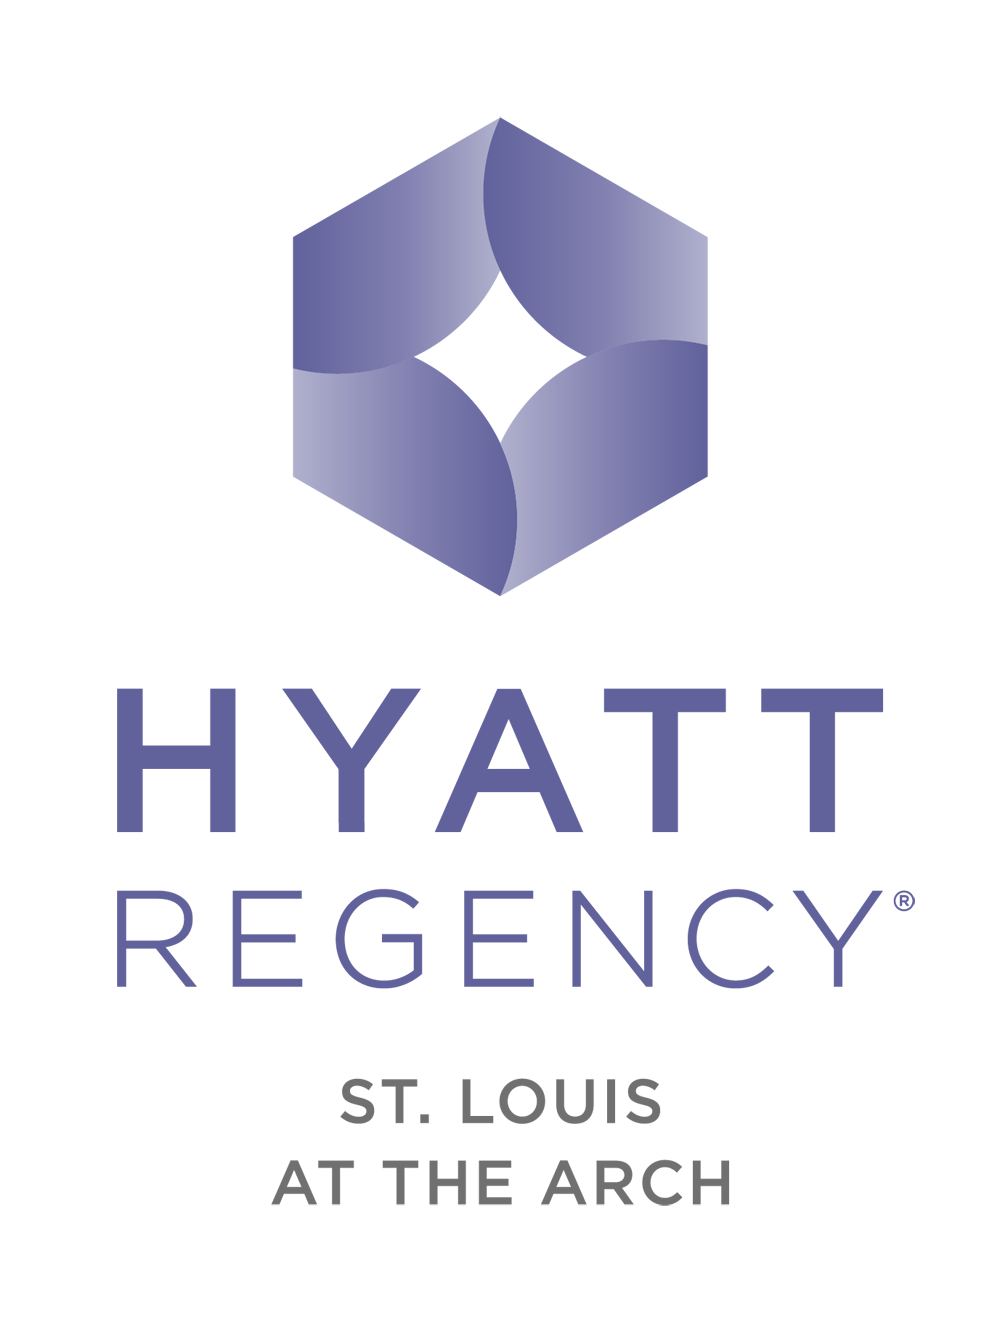 Hyatt Regency St. Louis at the Arch